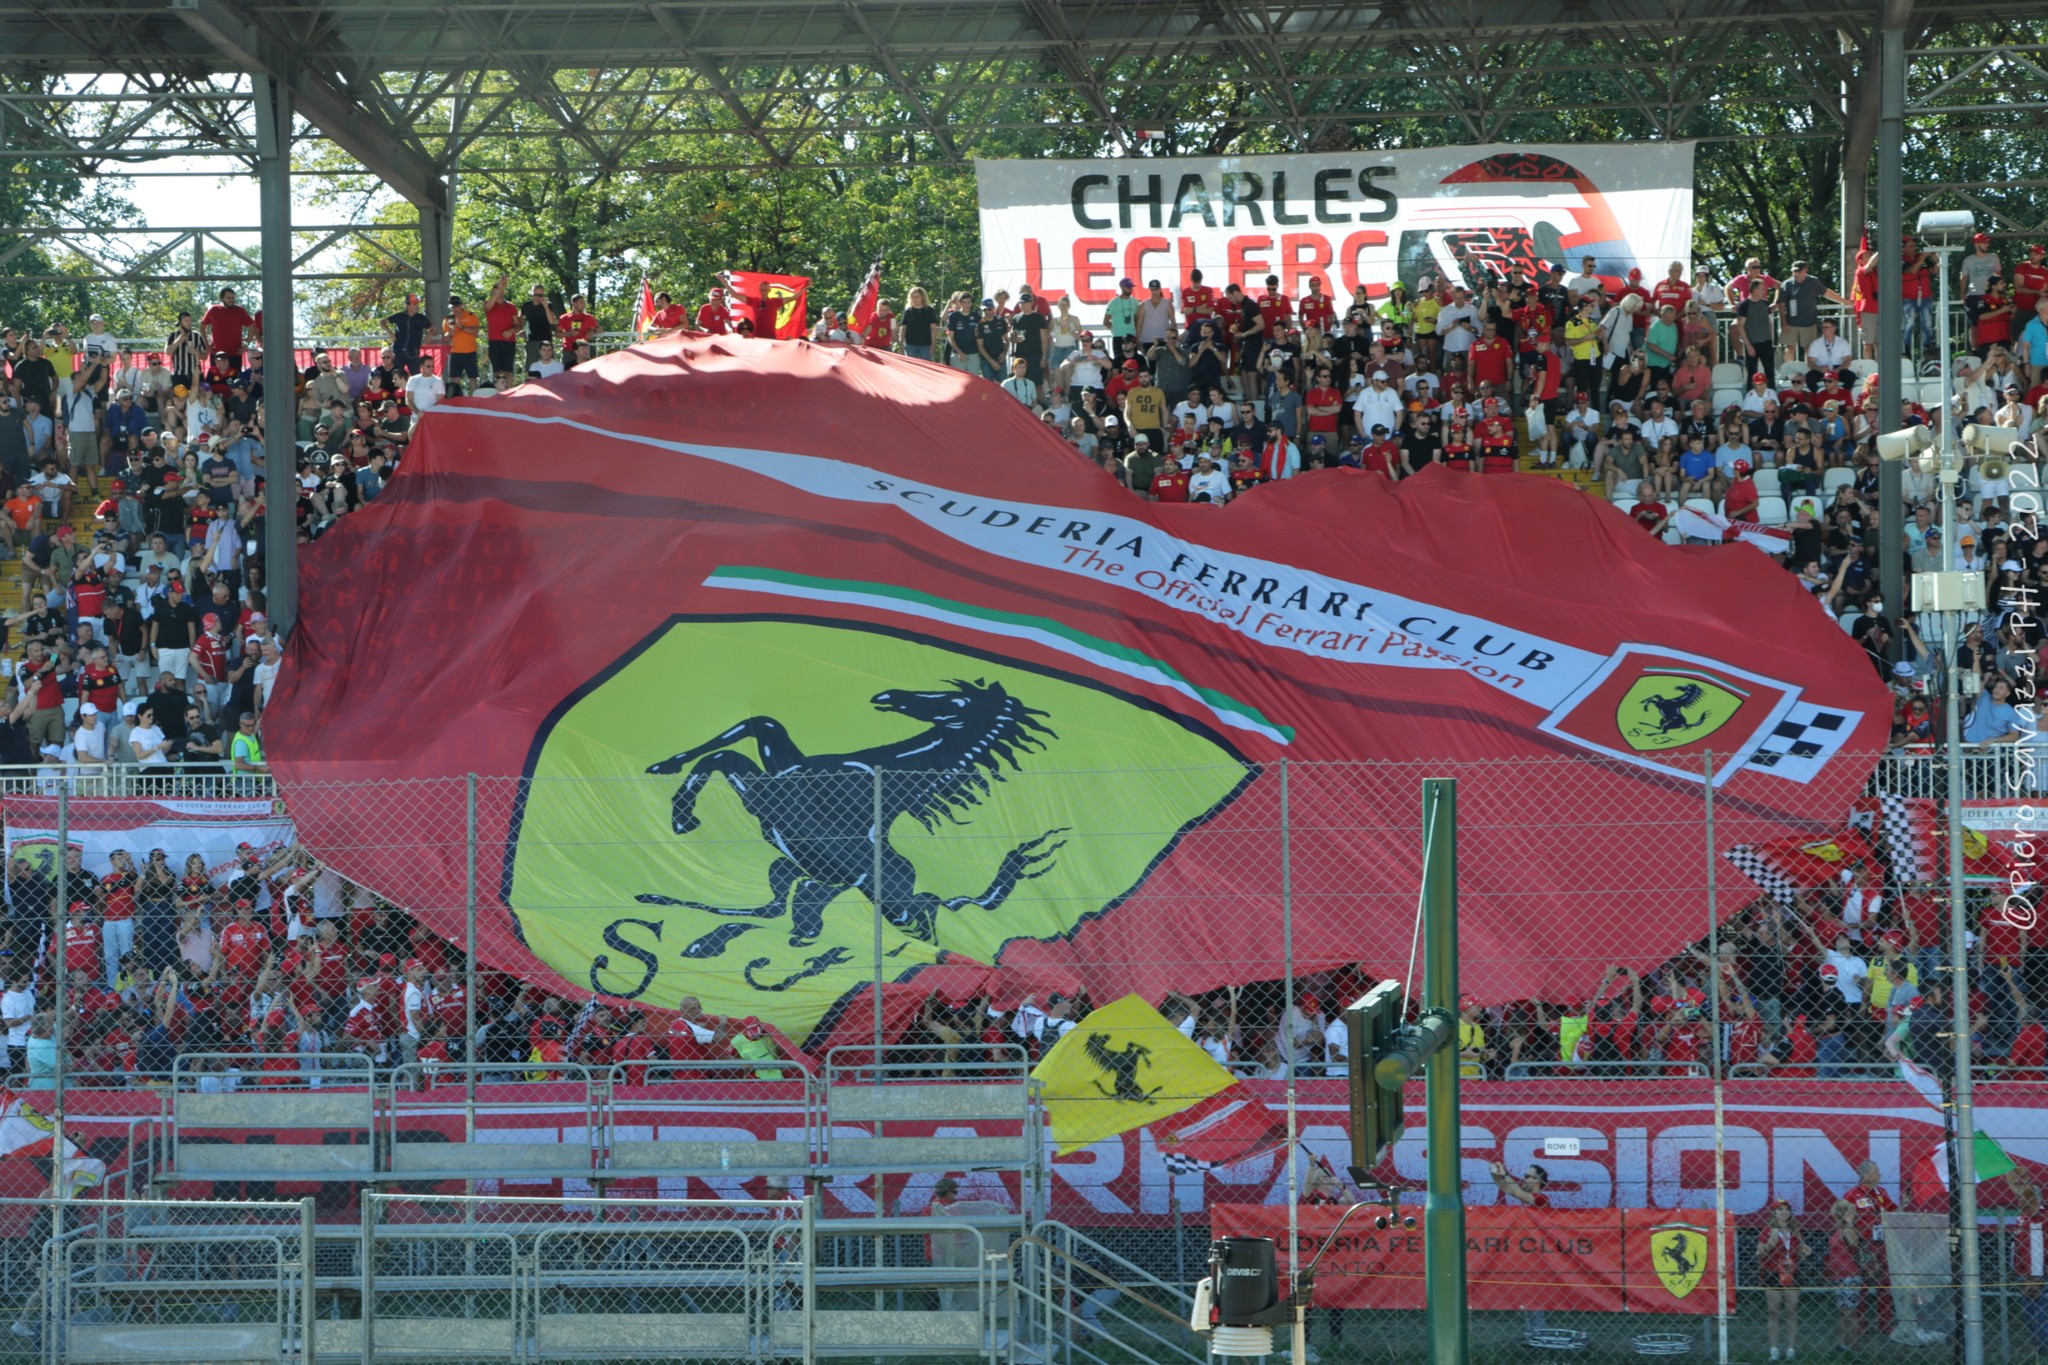 Scuderia Ferrari Club fans with their big red heart-shaped flag. 